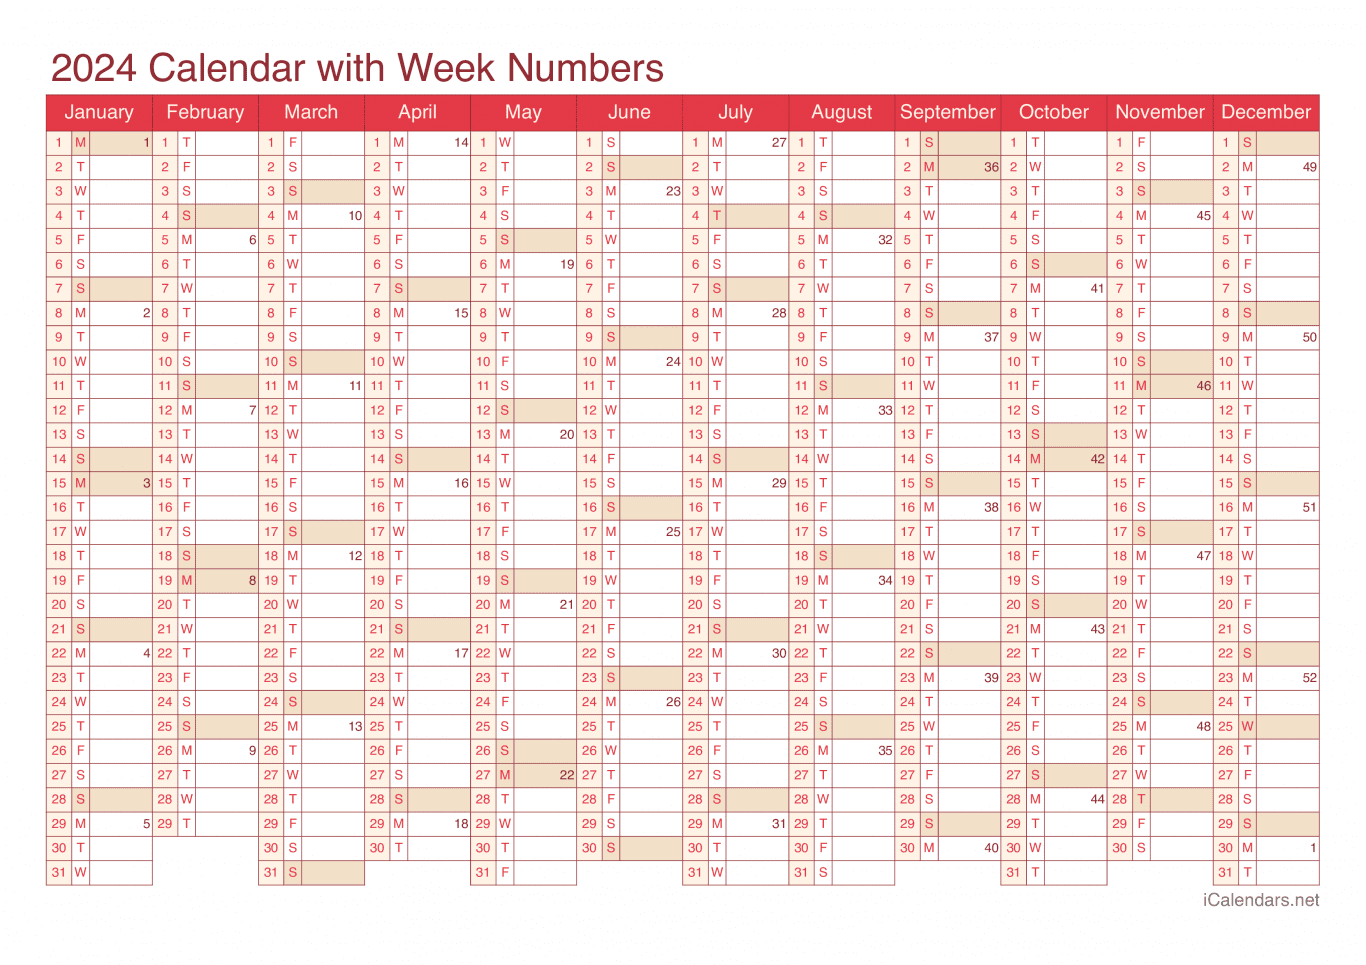 2024 Calendar with week numbers - Cherry